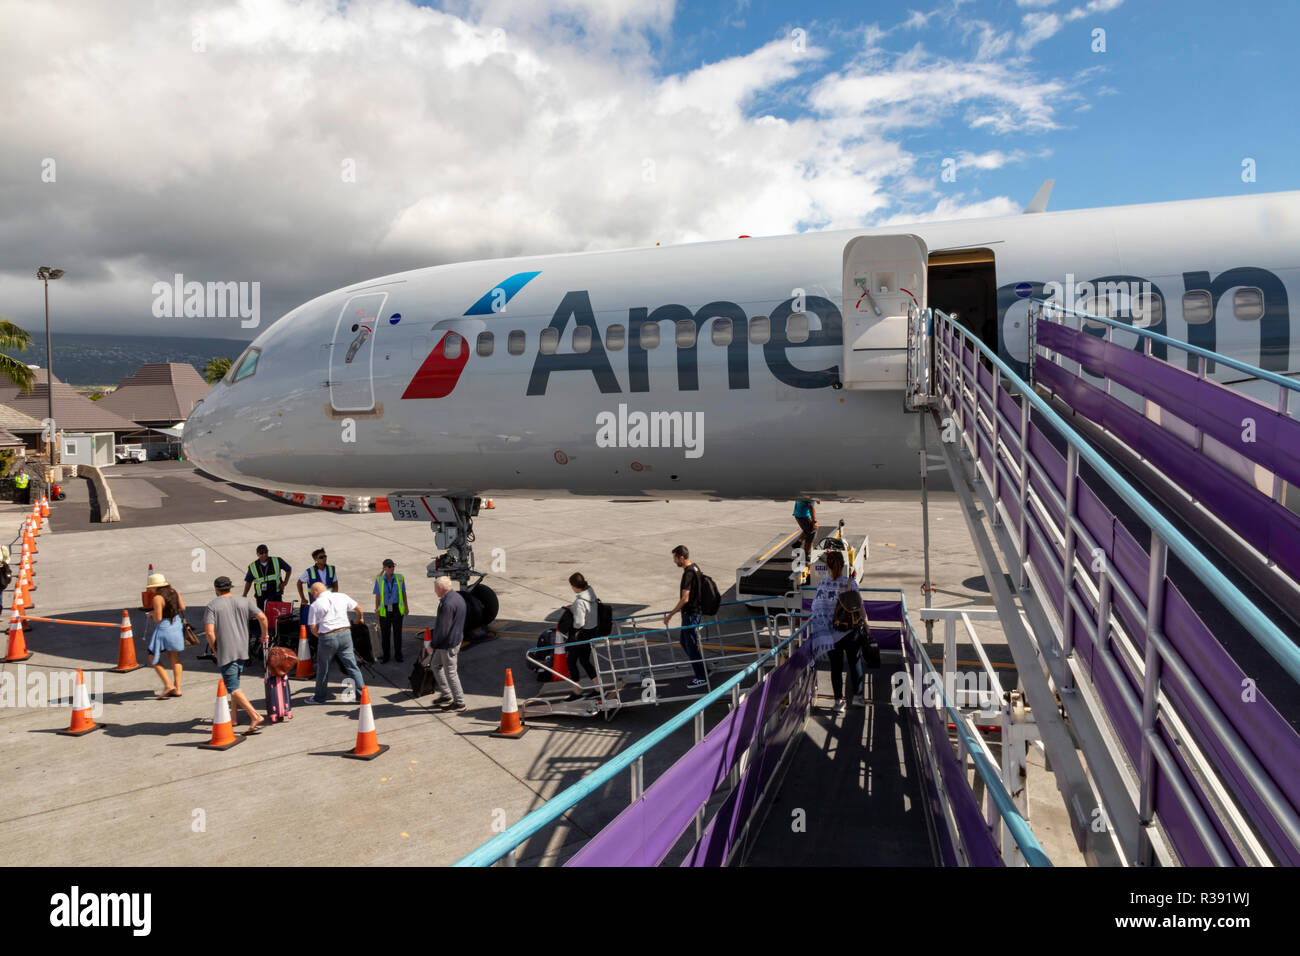 Kailua-Kona, Hawaii - Les passagers qui quittent un avion d'American Airlines à l'aéroport international de Kona sur Hawaii's Big Island. Banque D'Images